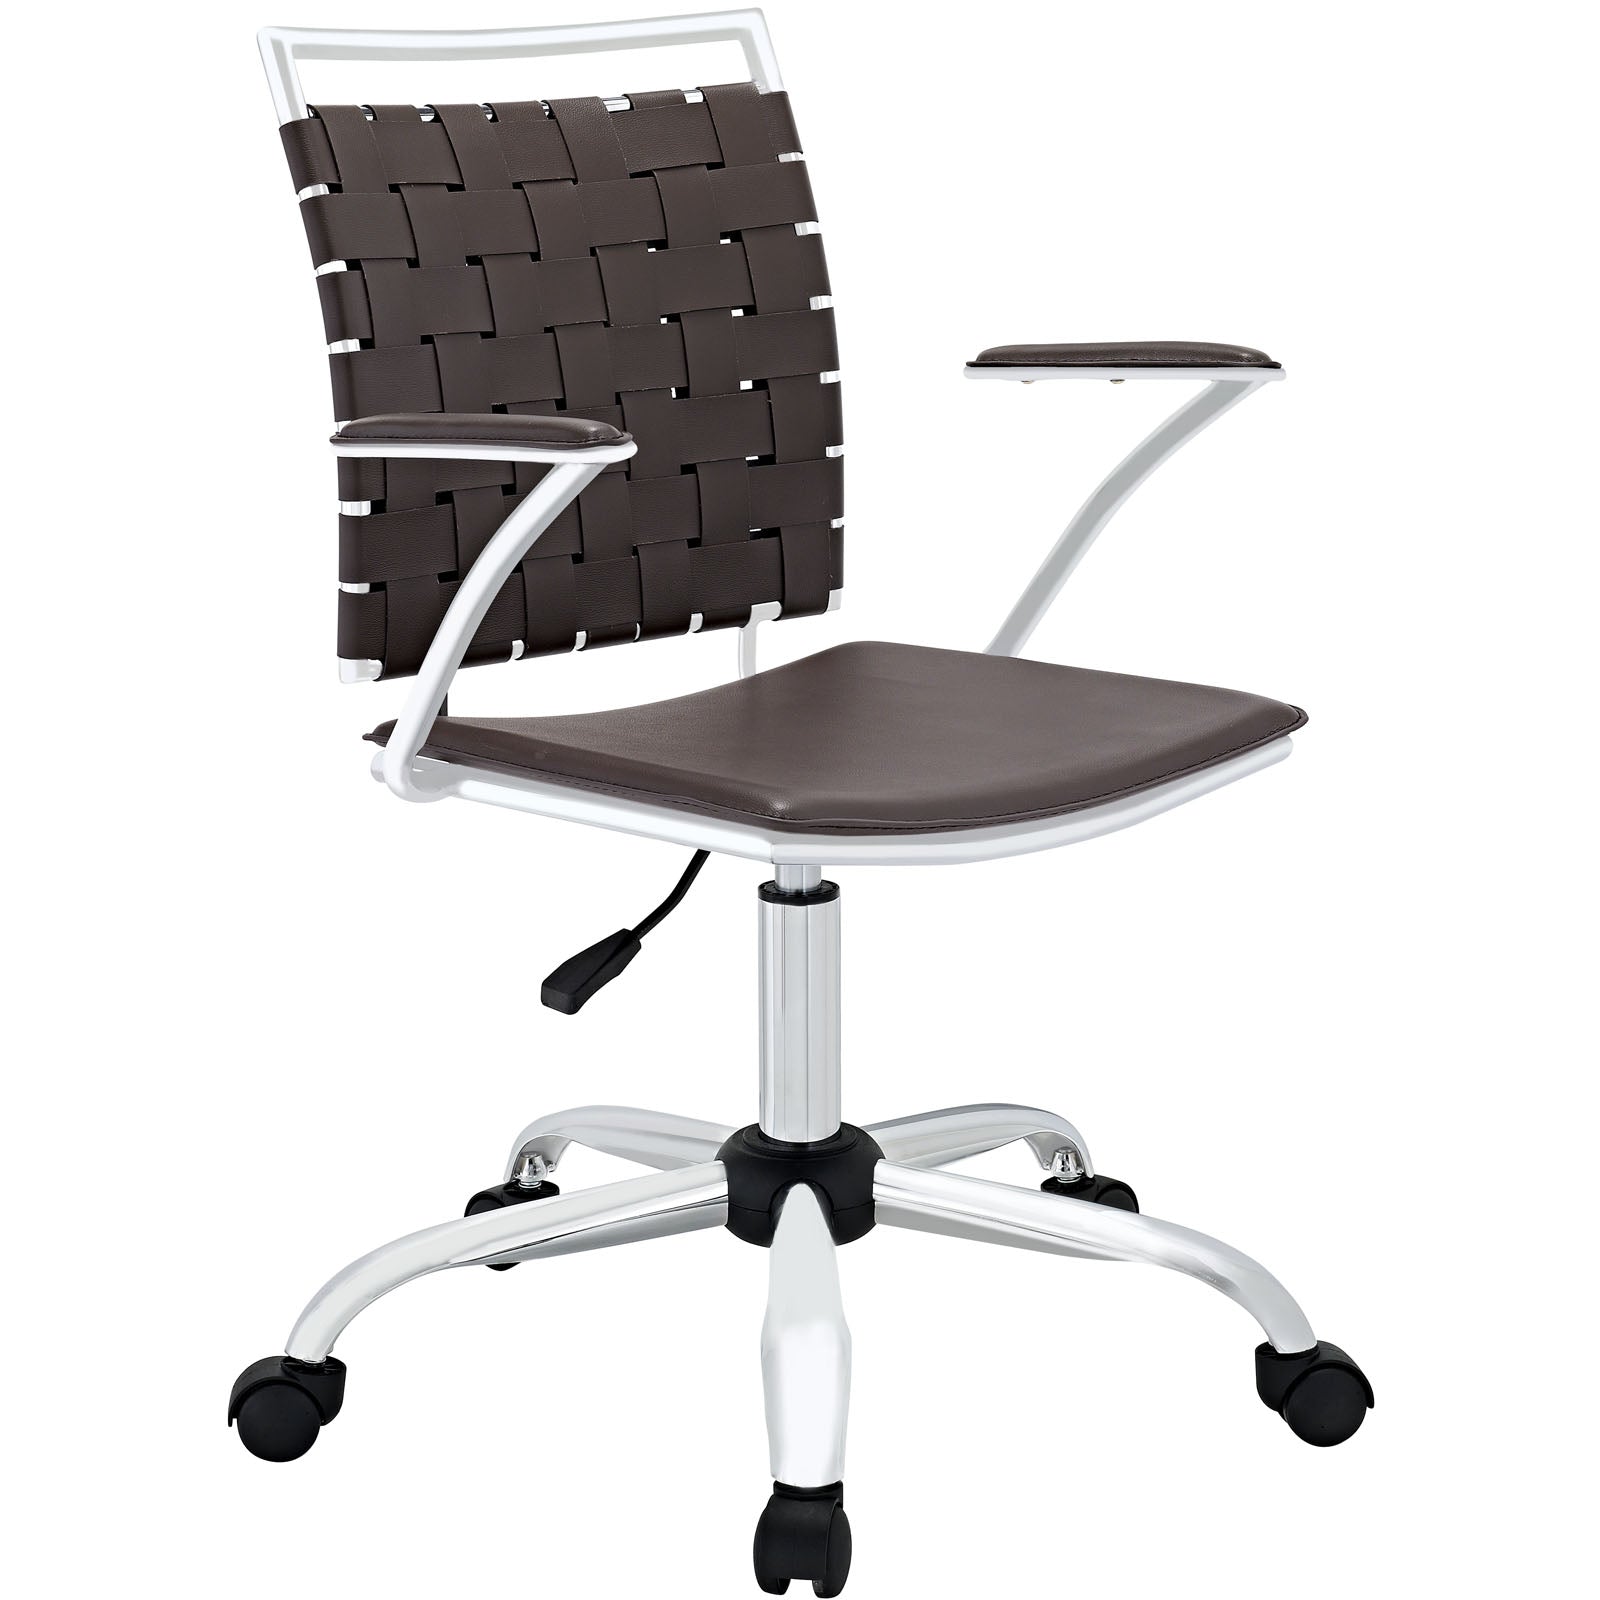 Criss Cross Office Chair White